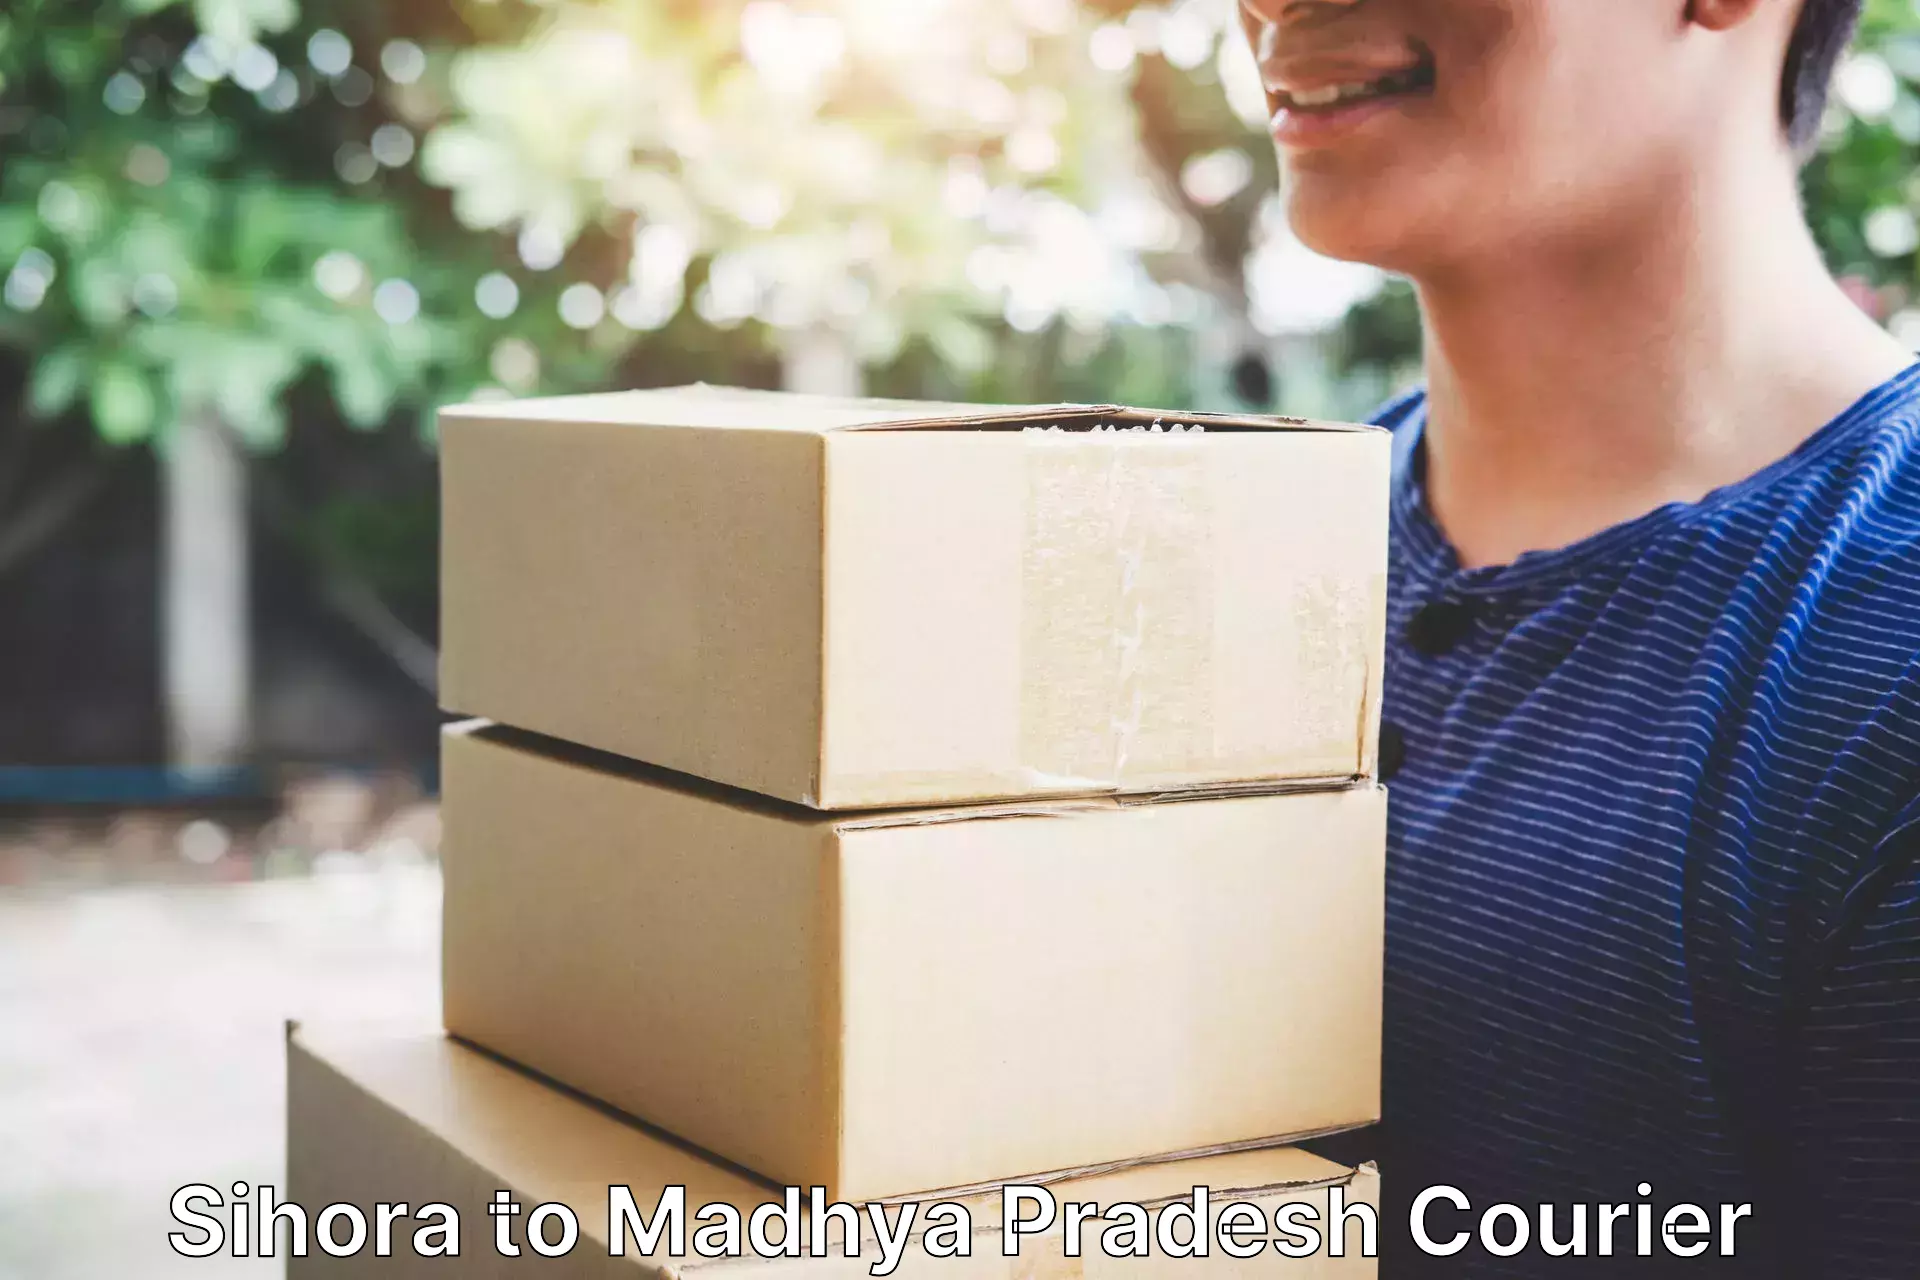 Luggage shipment specialists Sihora to Madhya Pradesh